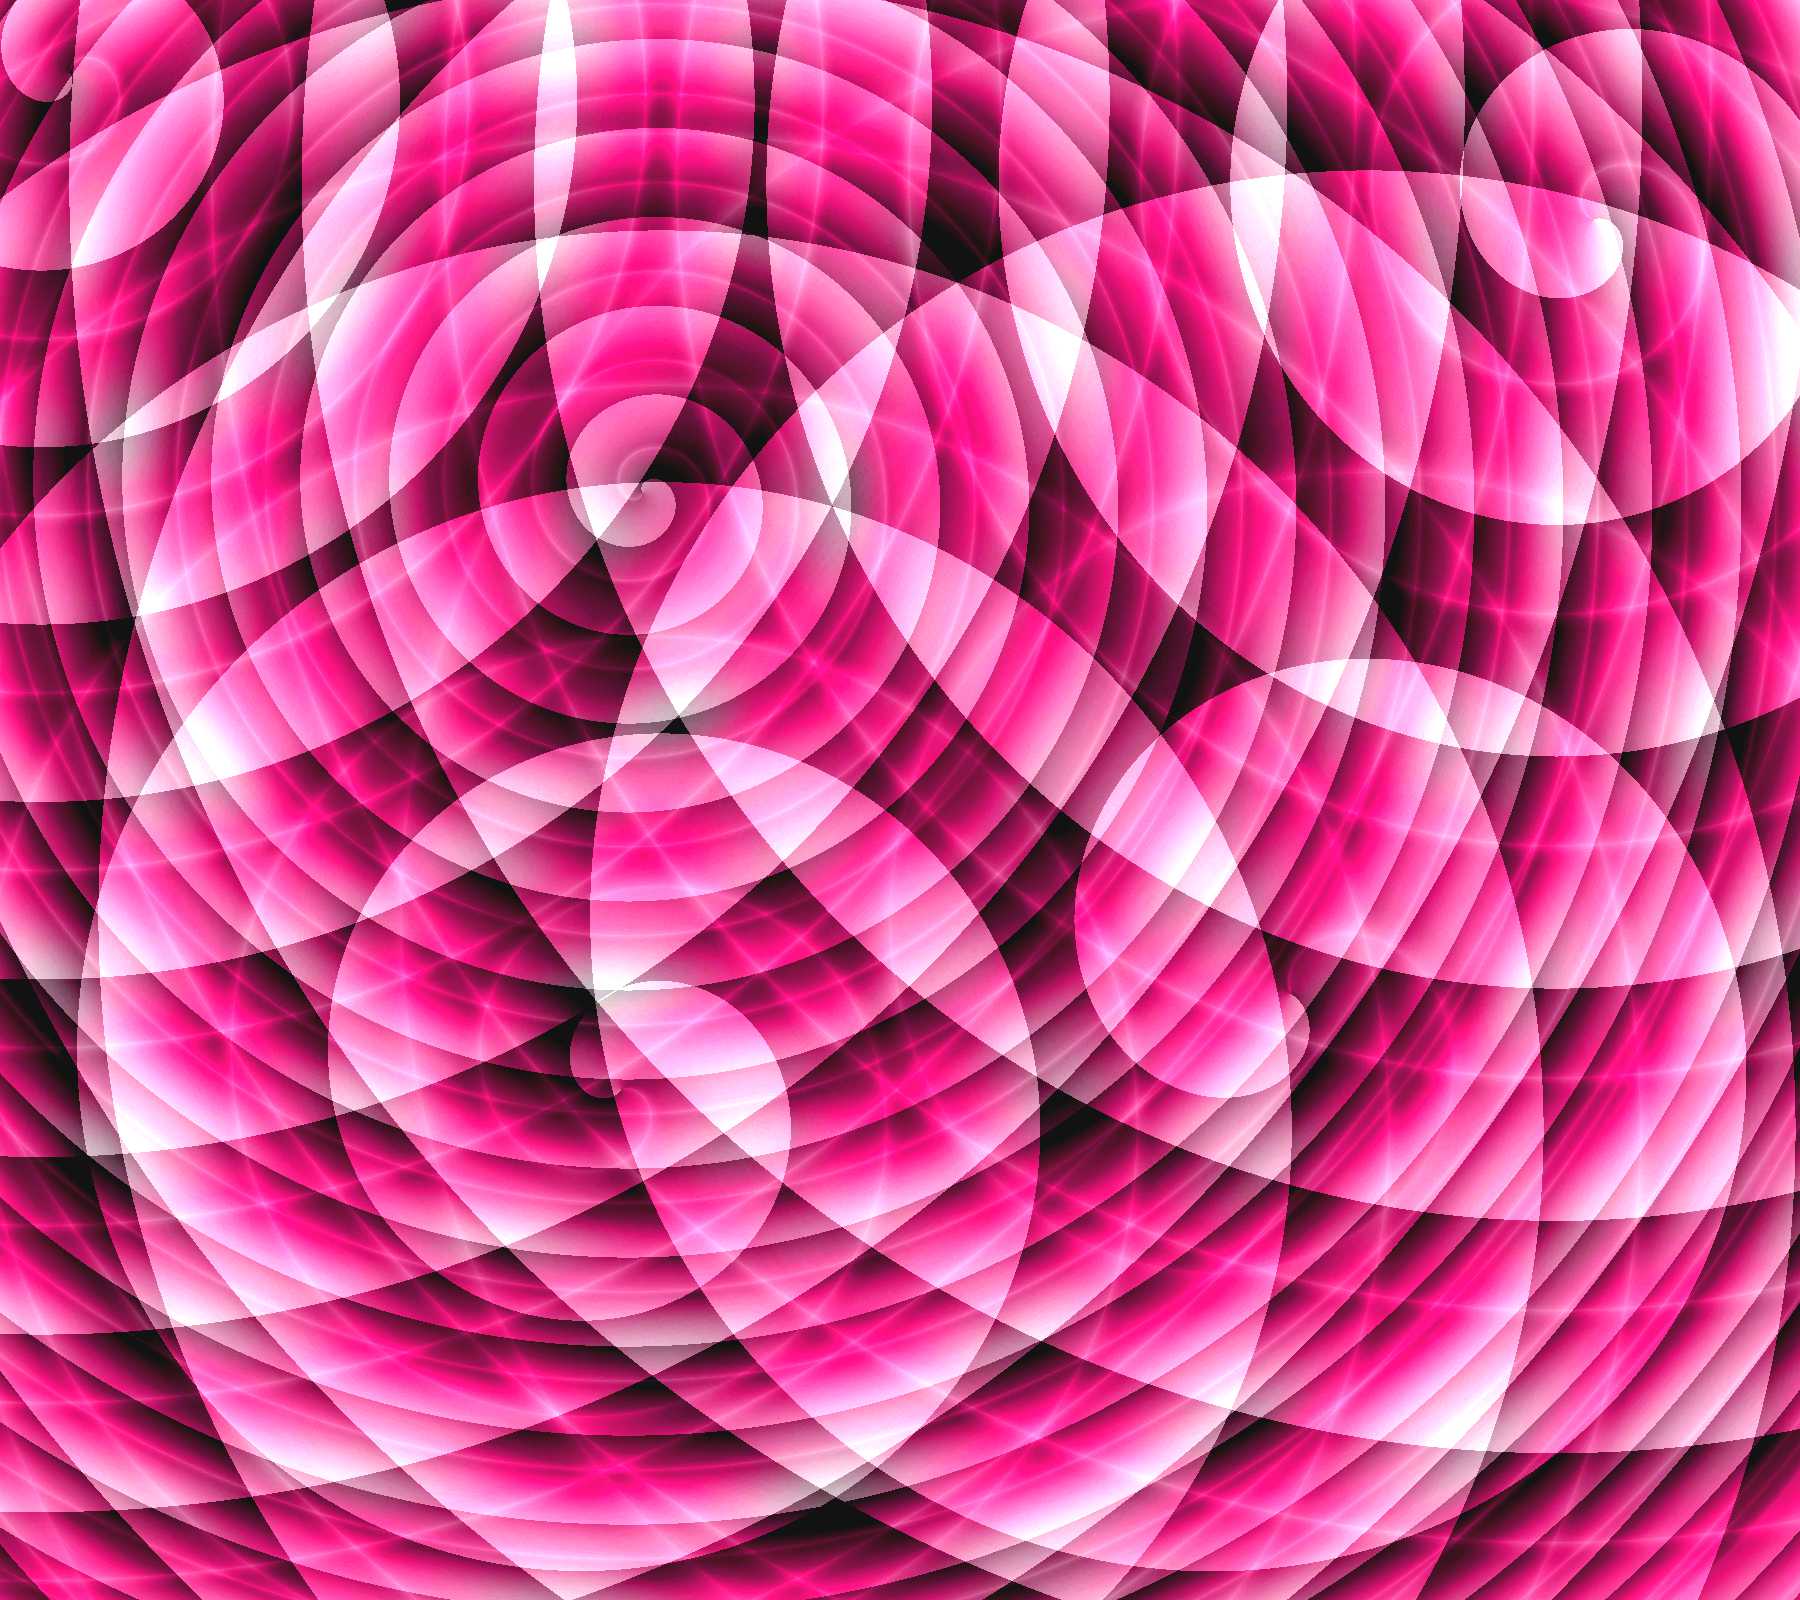 Hot Pink Random Spiral Swirls Wallpaper 1800x1600 px Free Download